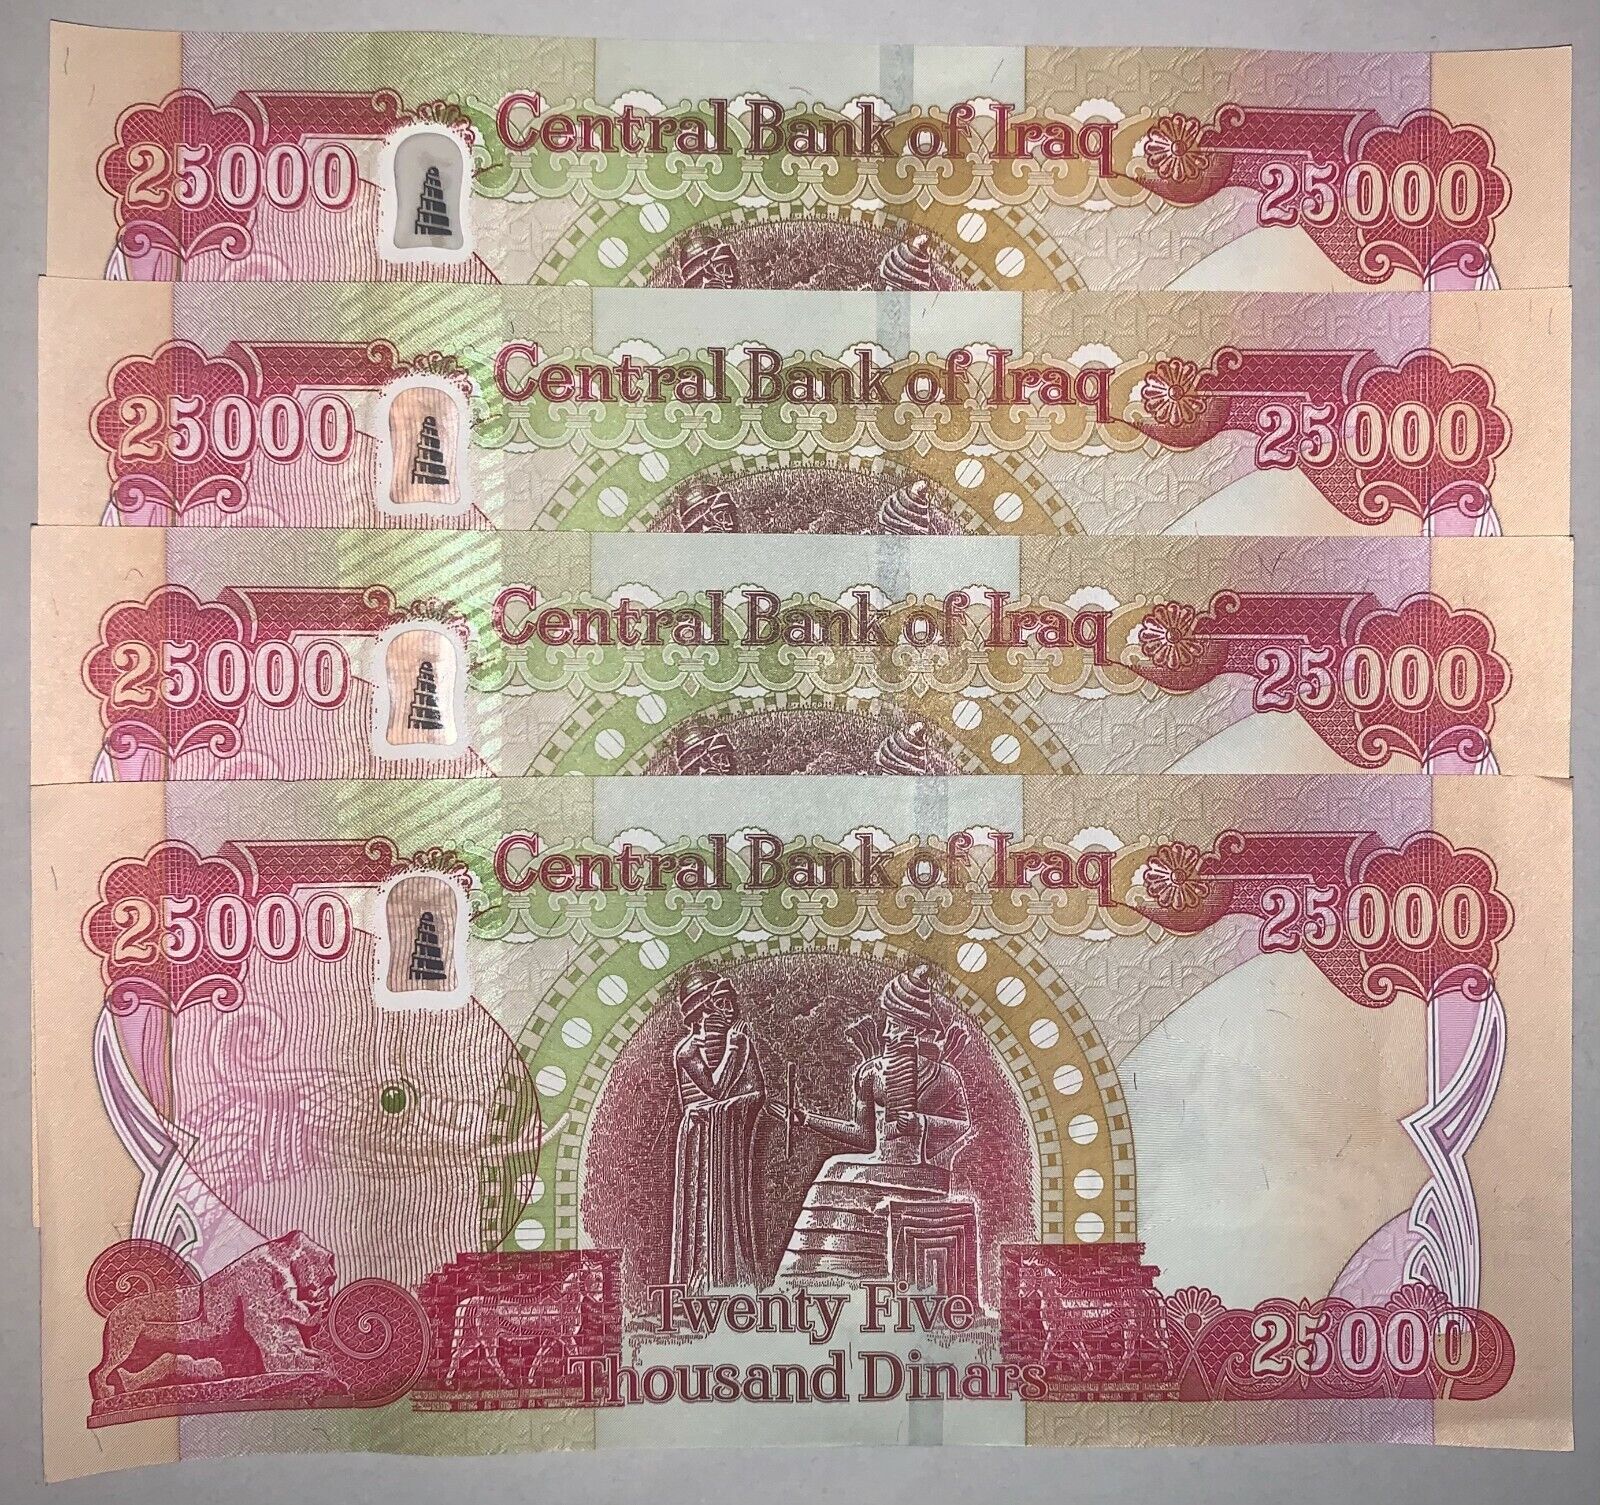 100000 IRAQ DINAR FOR SALE | NEW UNCIRCULATED 25000 25K IQD | BUY IRAQI MONEY